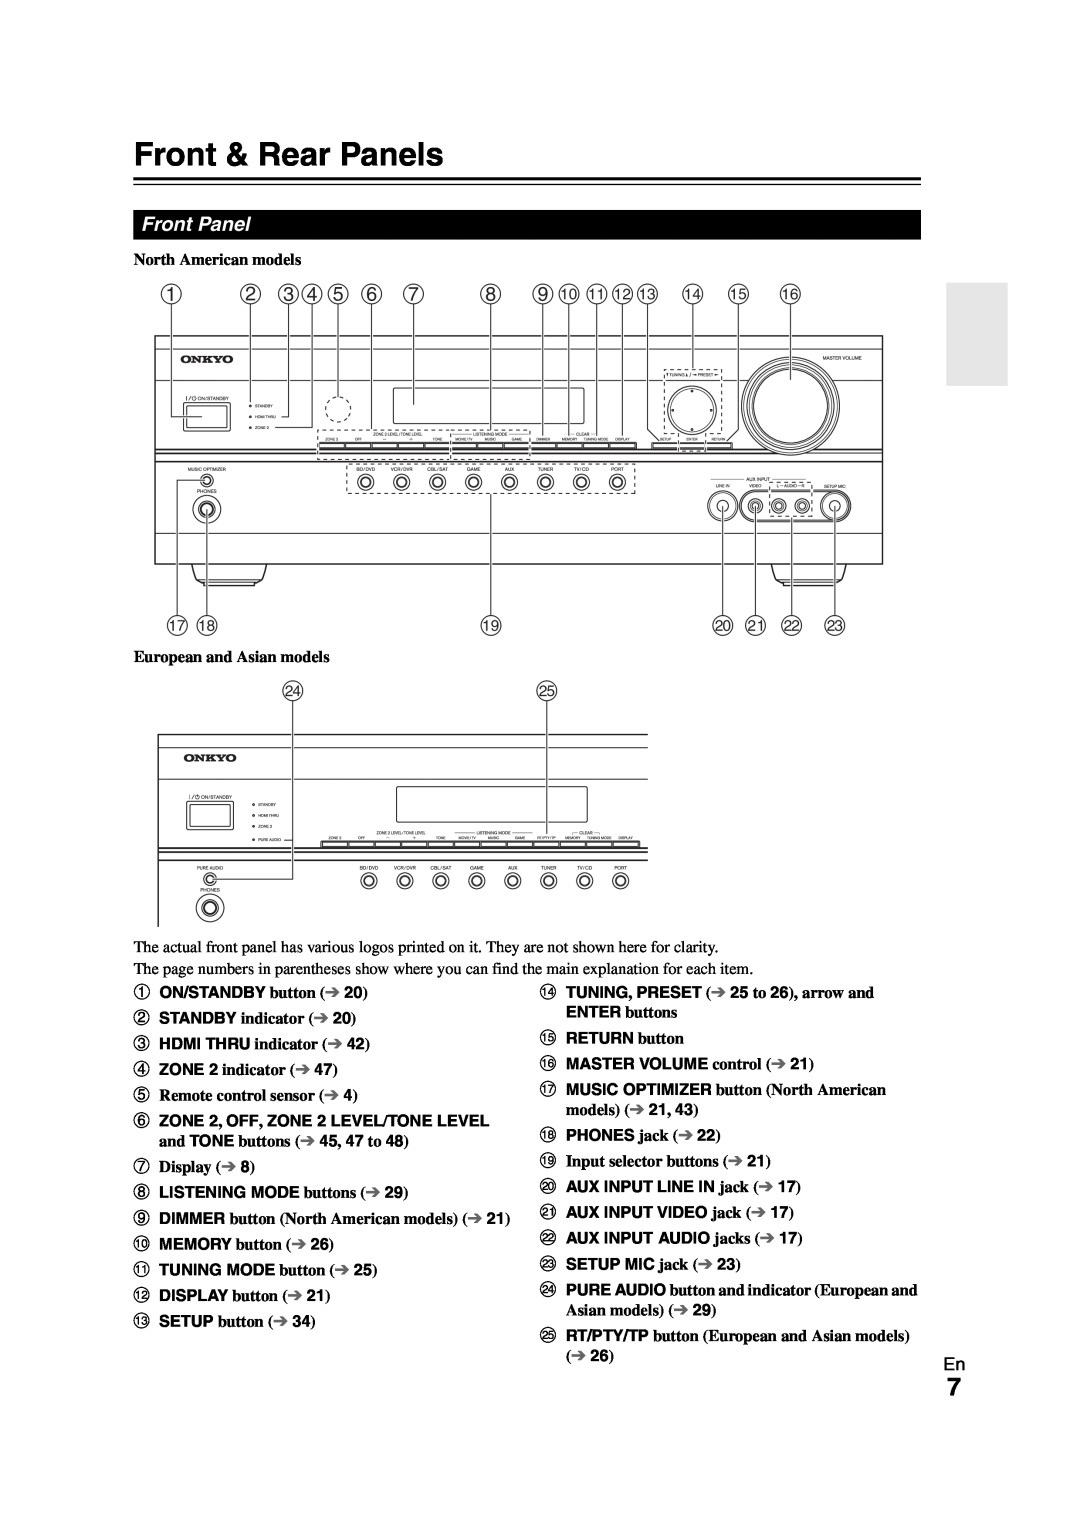 Onkyo TX-SR508 Front & Rear Panels, Front Panel, b cde f g, ij klm n o p, t u v w, aON/STANDBY button, lDISPLAY button 